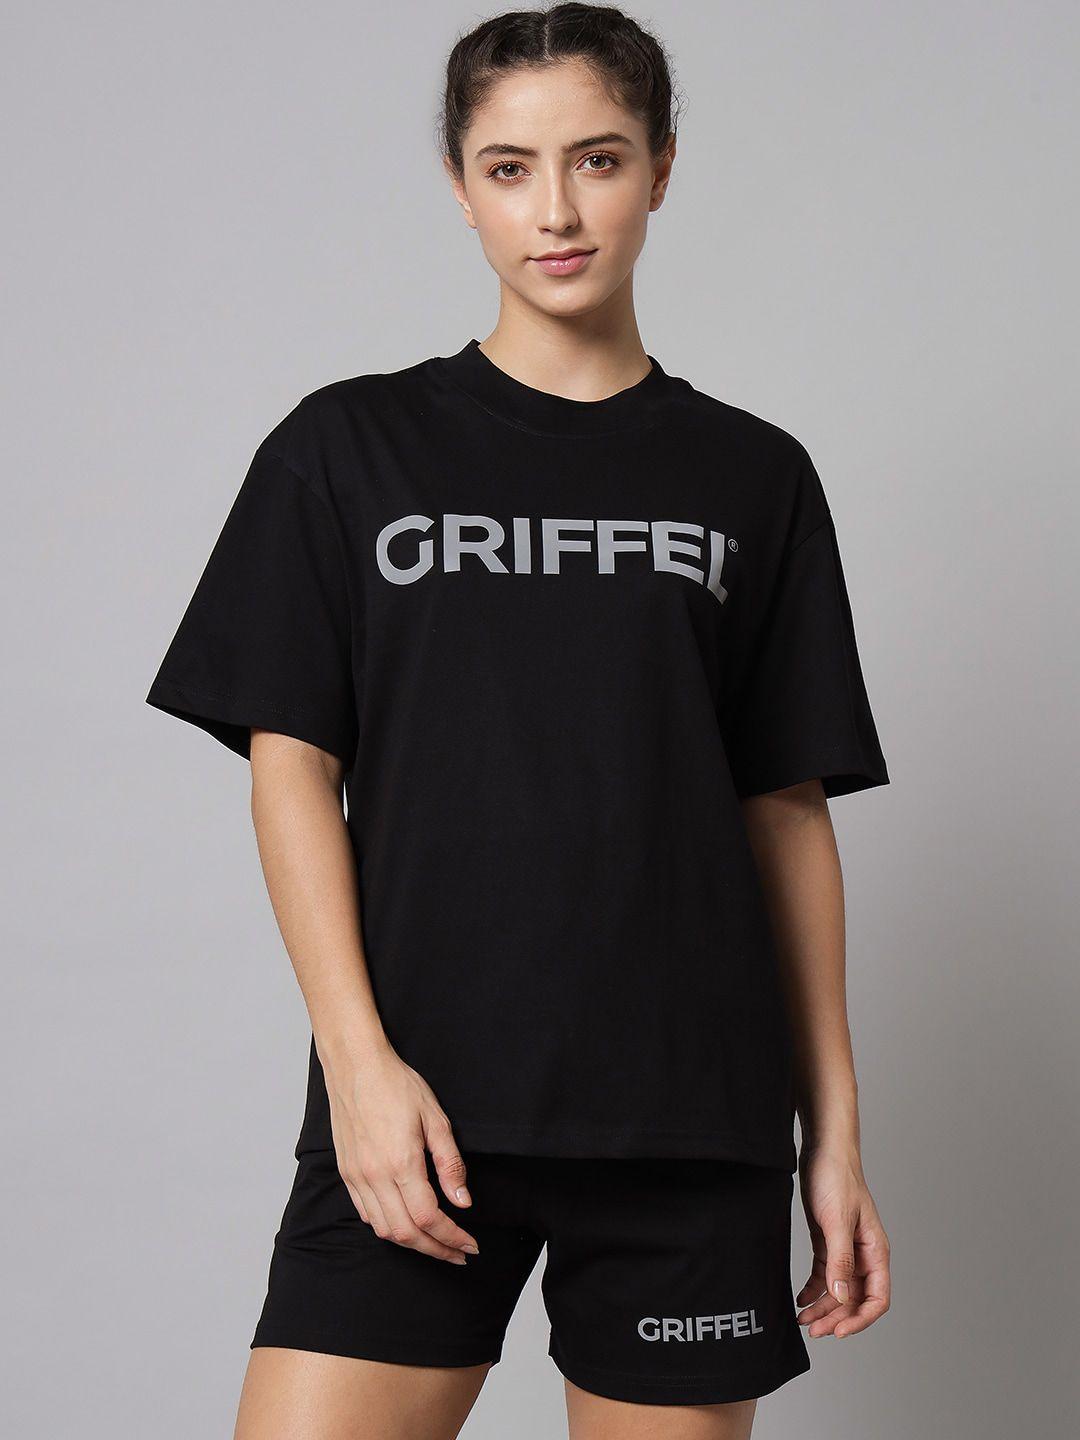 griffel-women-black-clothing-set